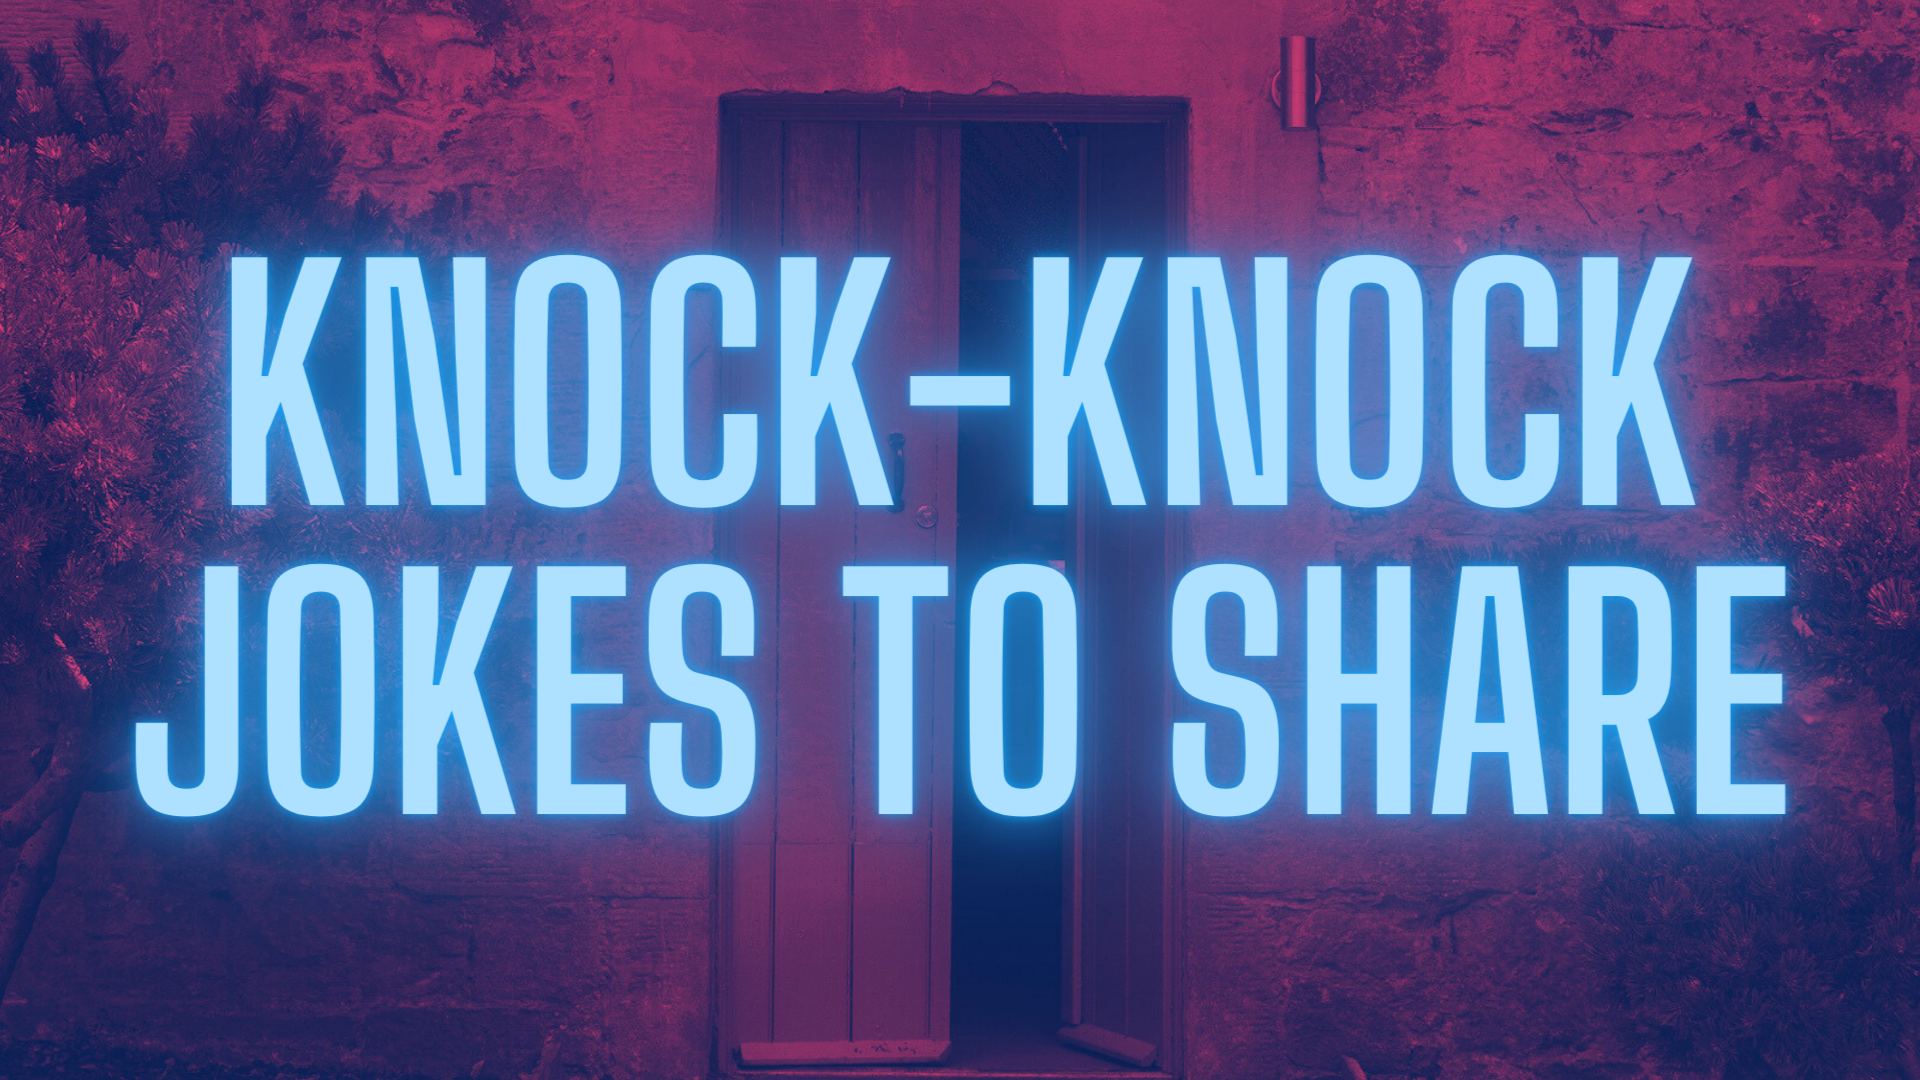 knock-knock jokes to share